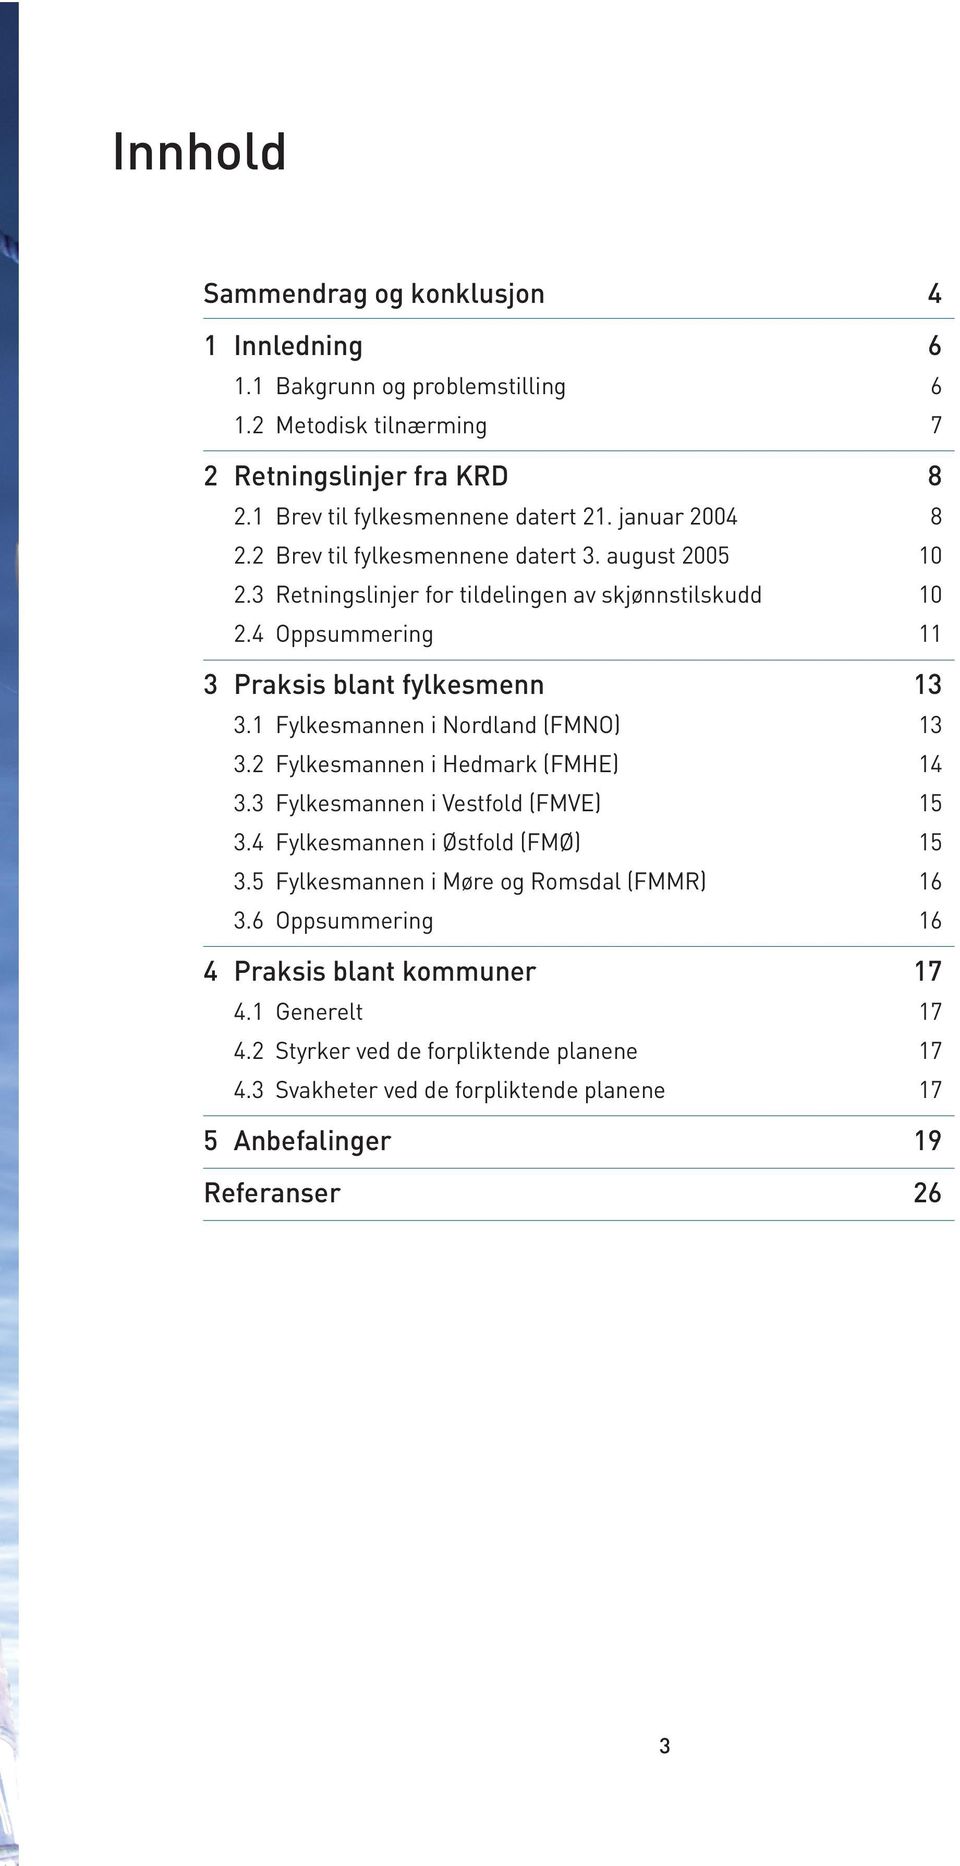 1 Fylkesmannen i Nordland (FMNO) 13 3.2 Fylkesmannen i Hedmark (FMHE) 14 3.3 Fylkesmannen i Vestfold (FMVE) 15 3.4 Fylkesmannen i Østfold (FMØ) 15 3.